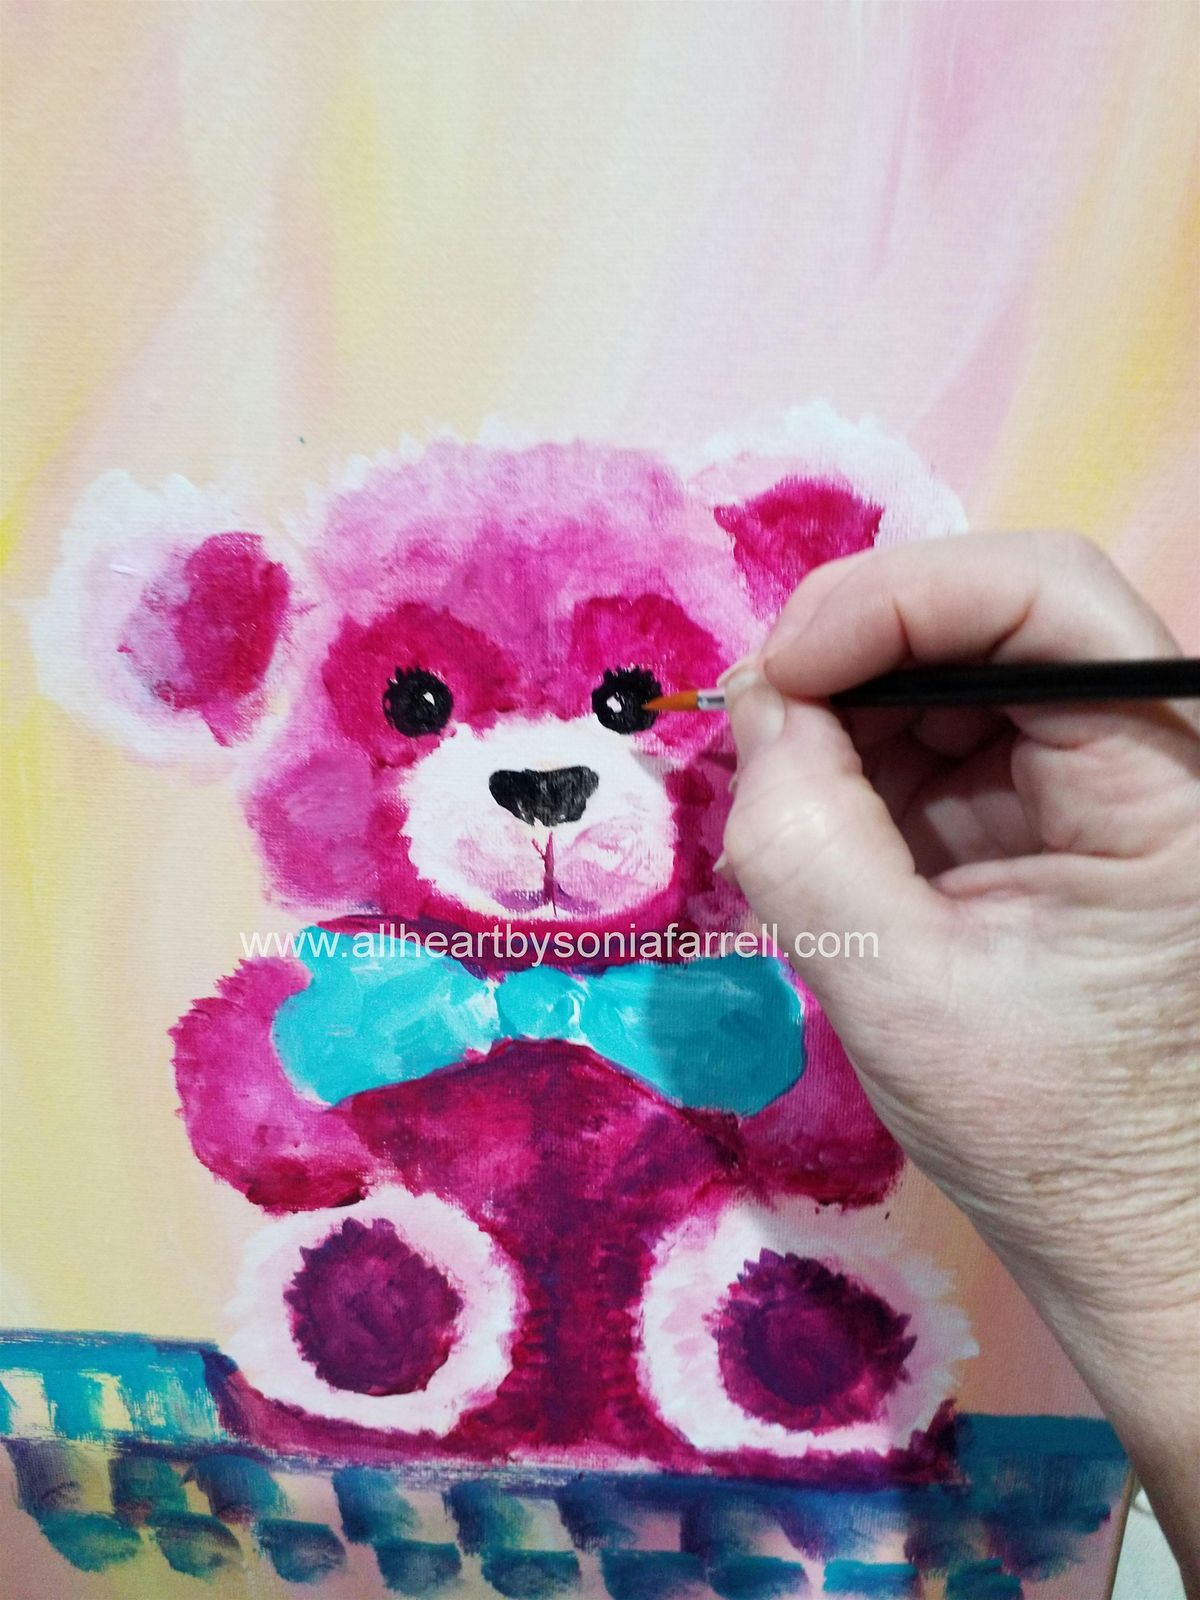 Bear Hugs Art Experience with Sonia Farrell: Creative Hearts Art